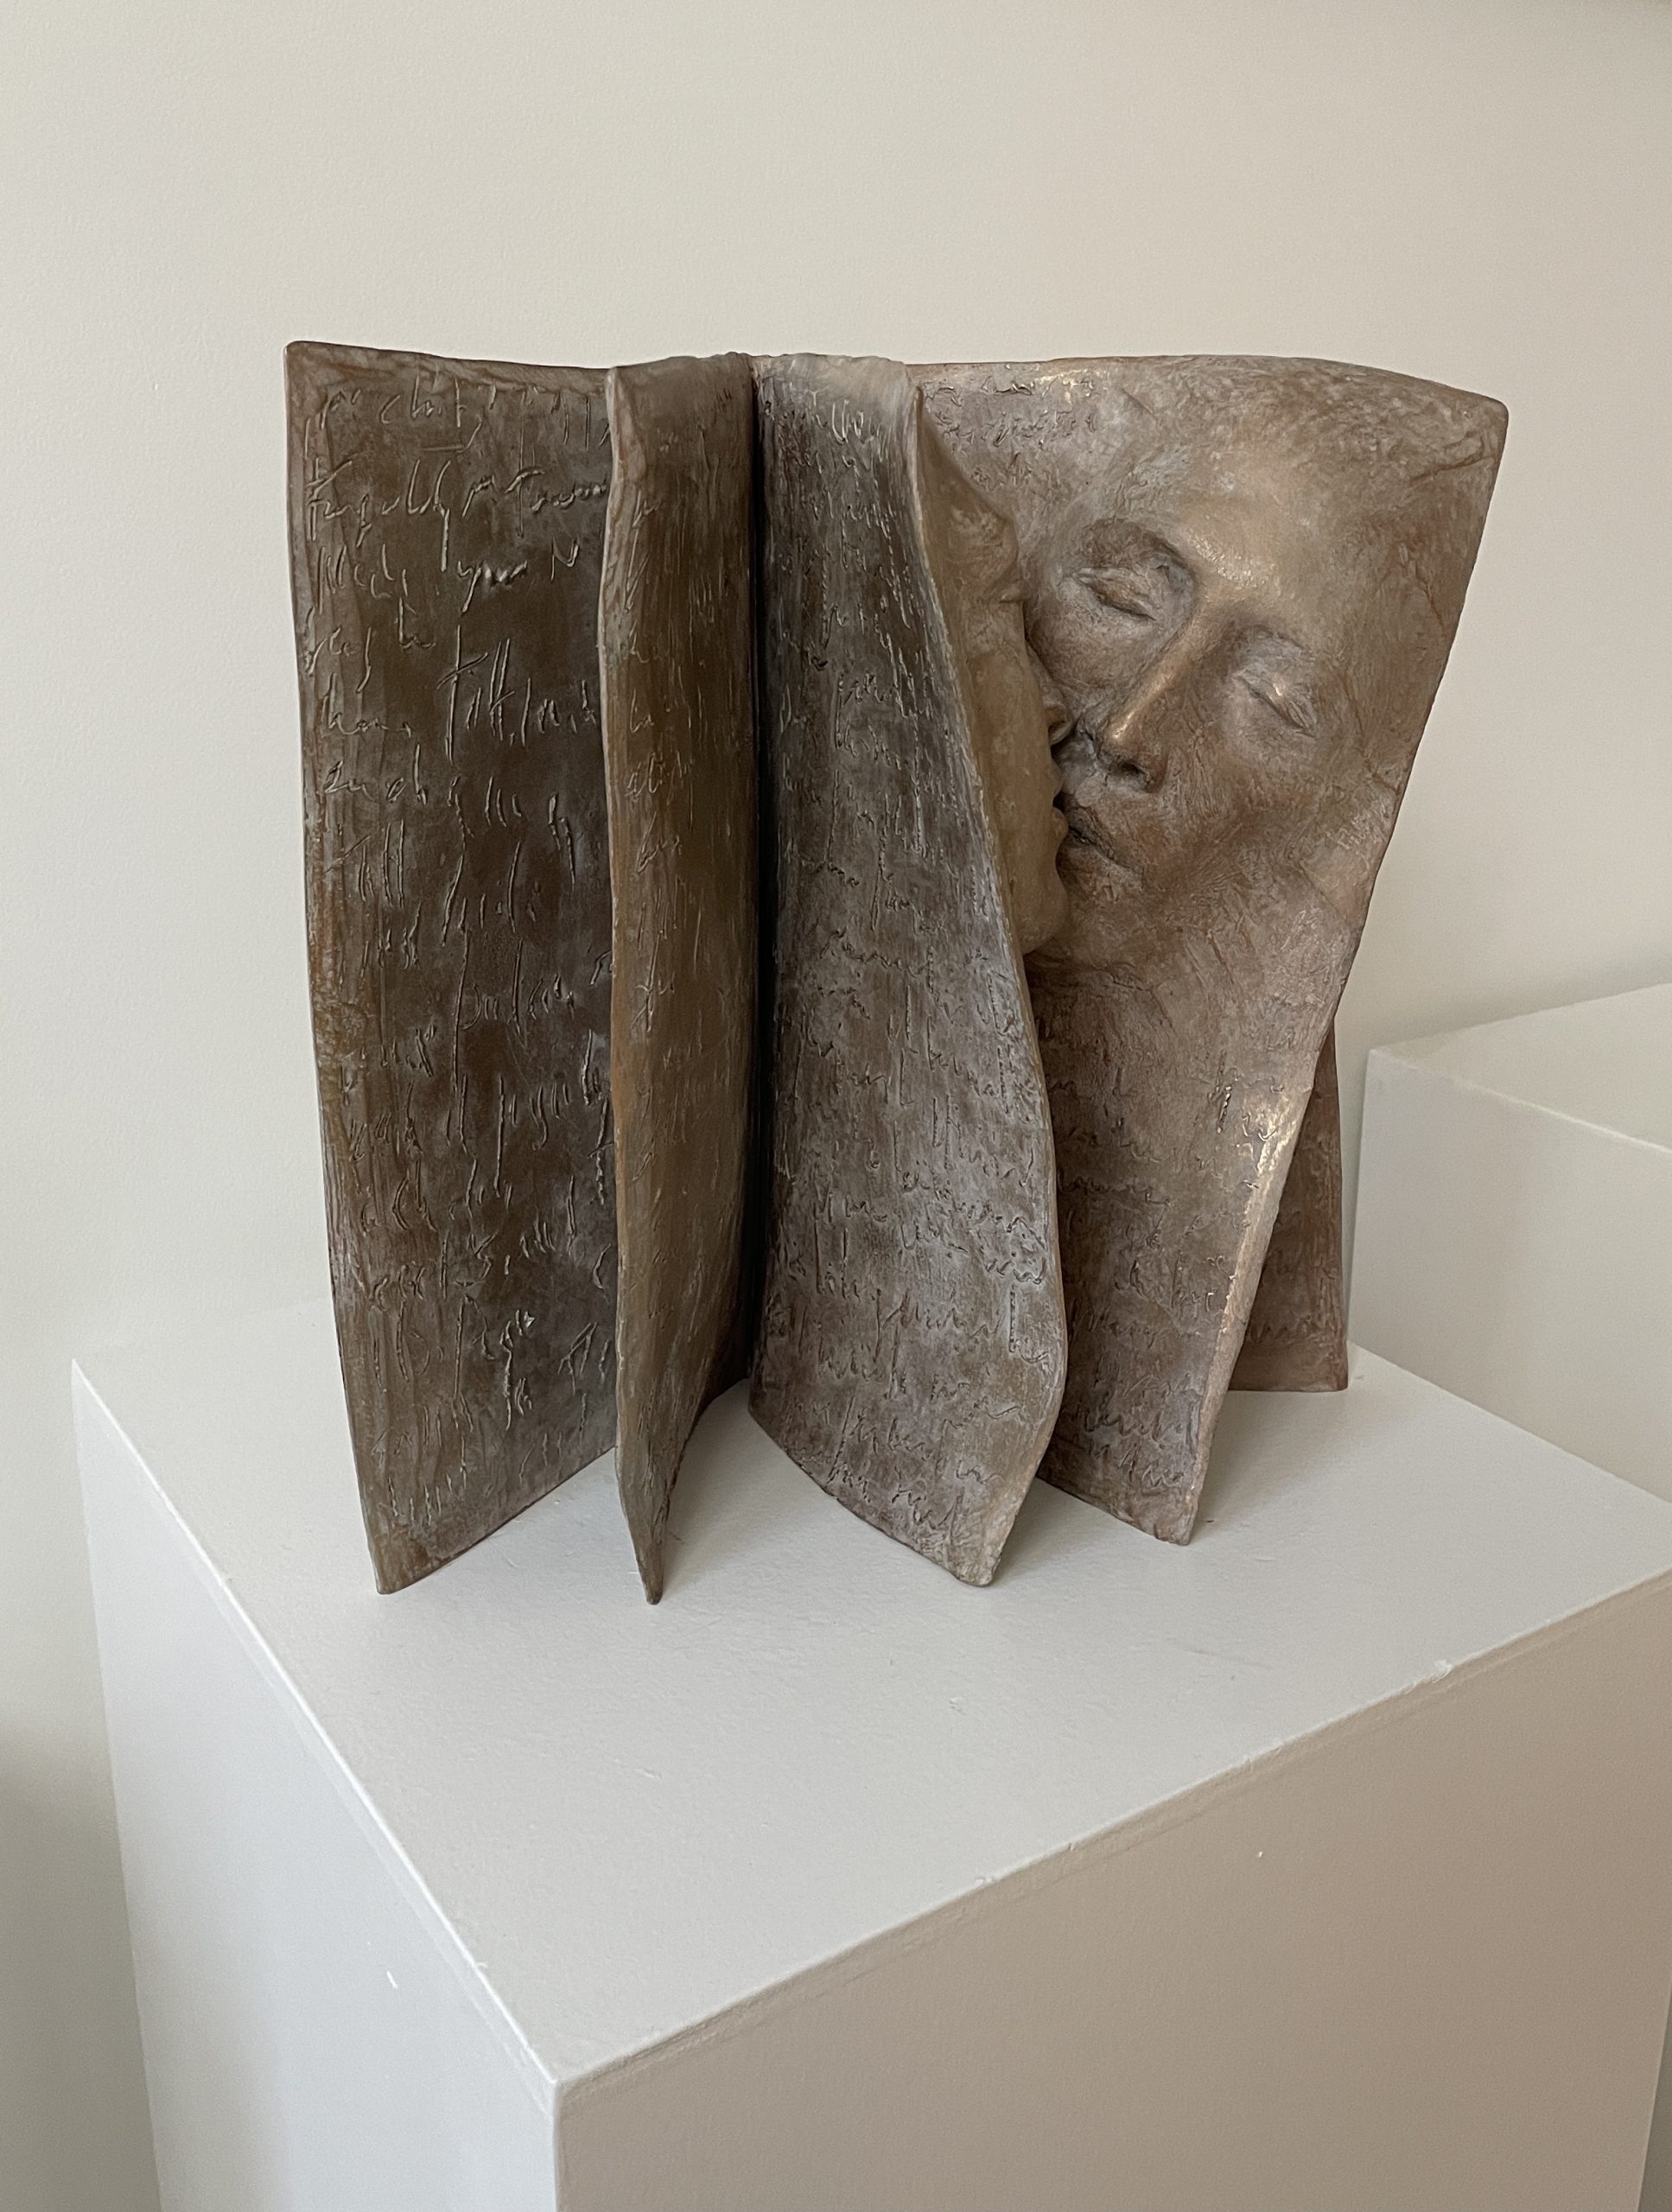 Kiss - Paola Grizi - sculpture bronze - © Casart